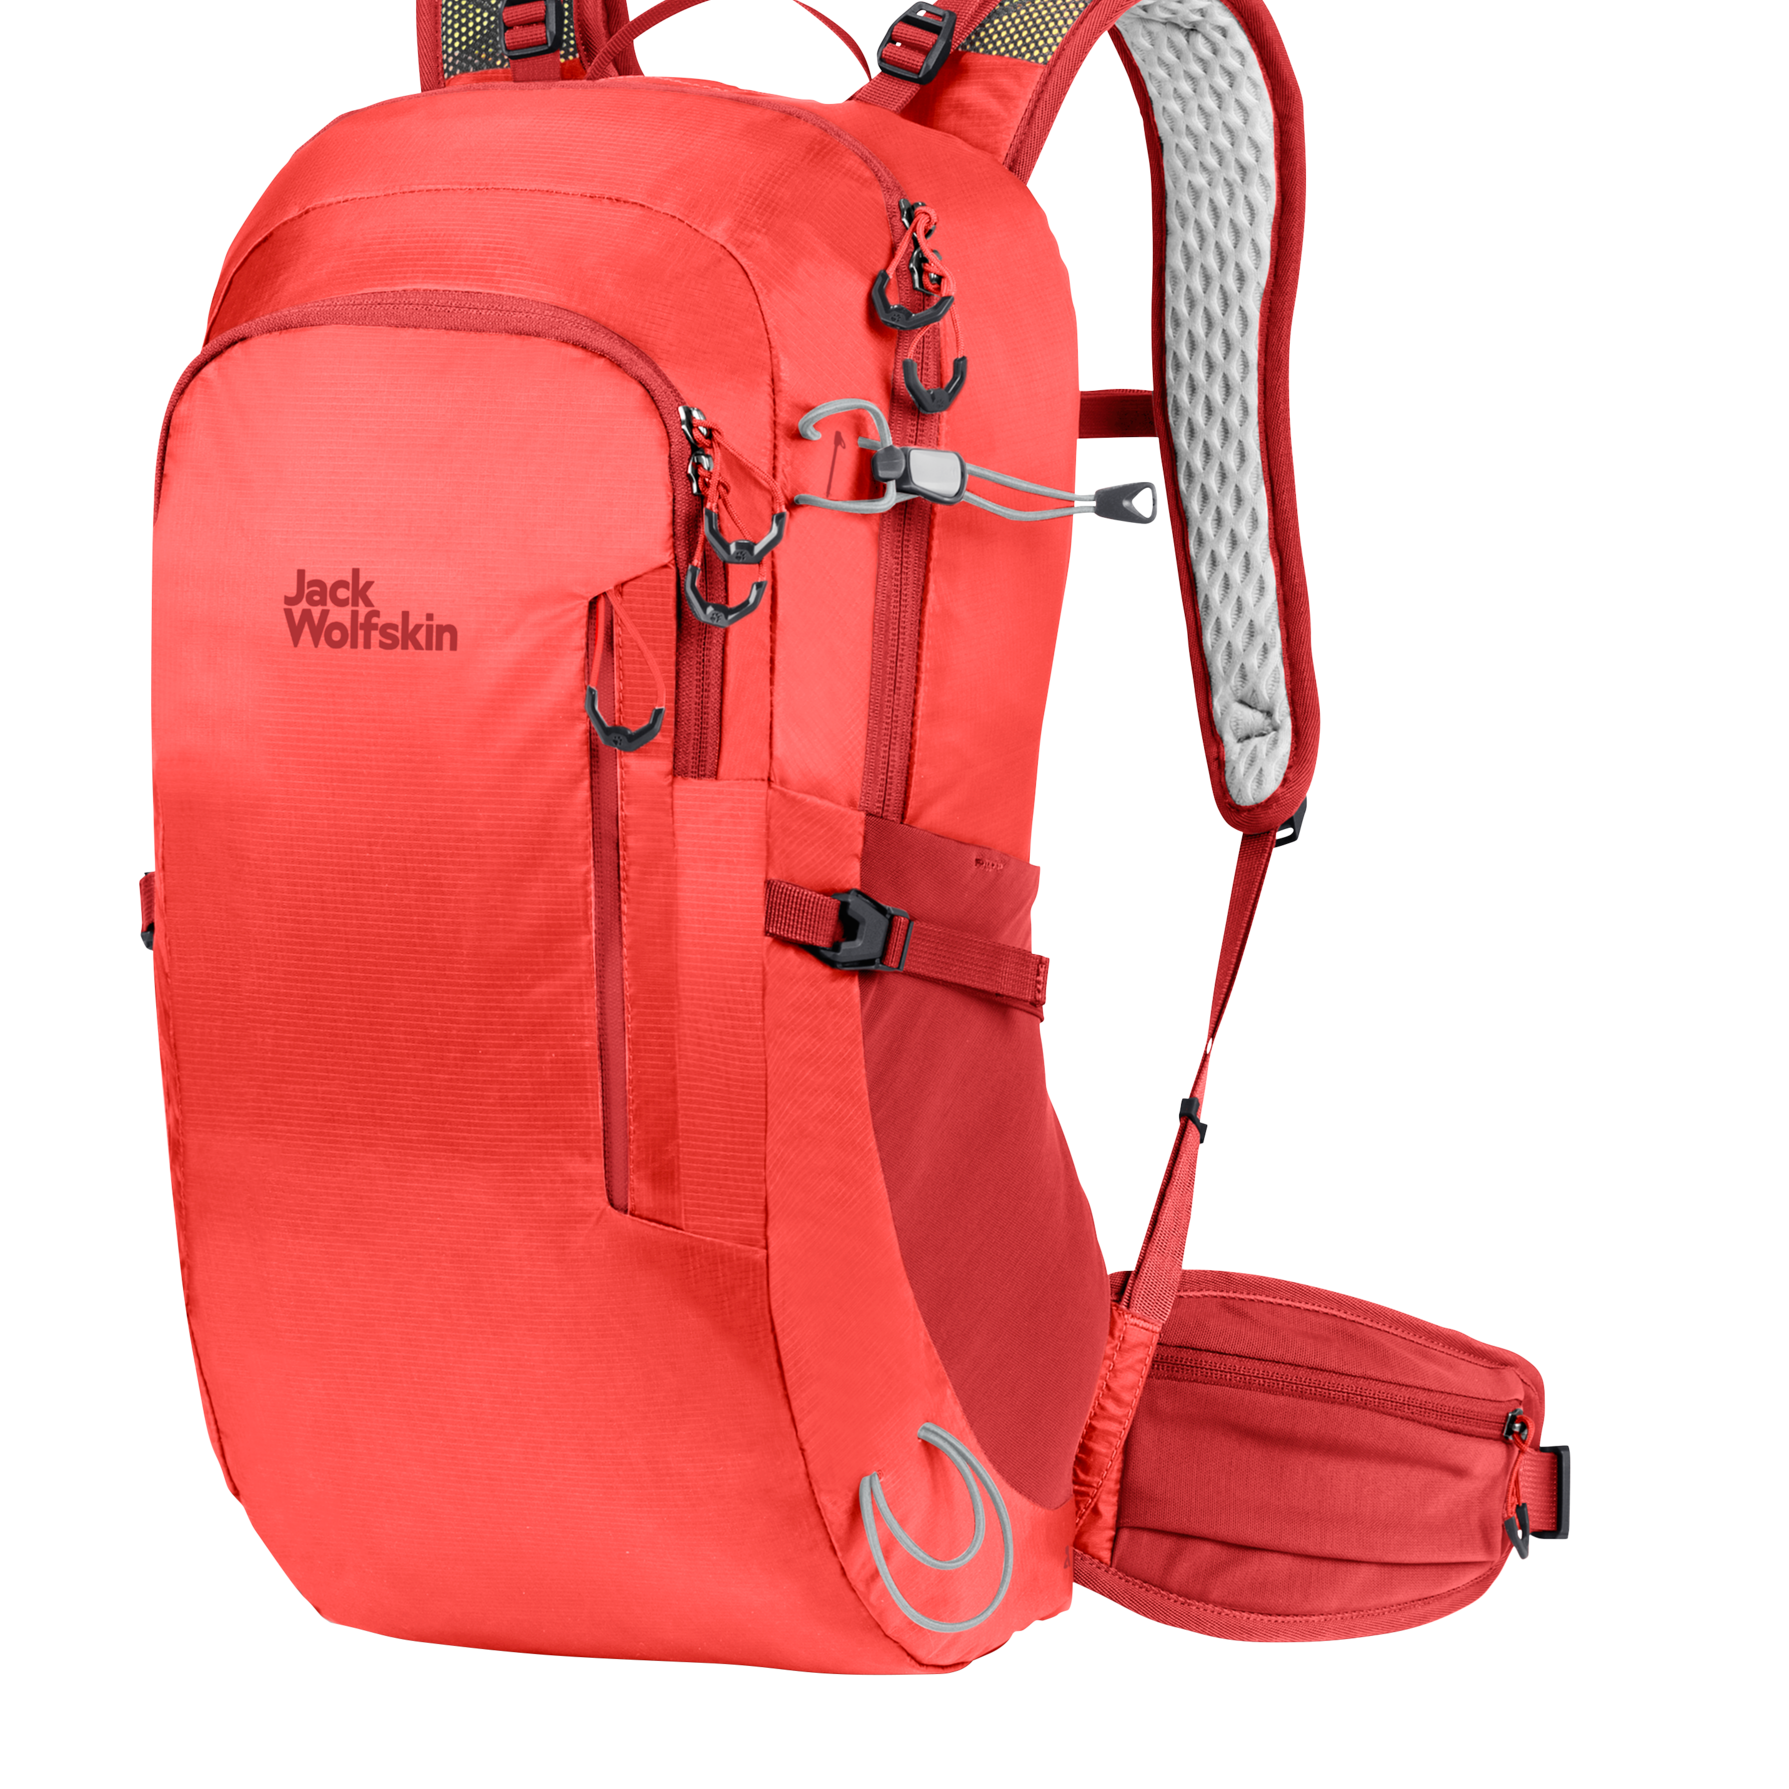 Athmos Shape 24L Backpack